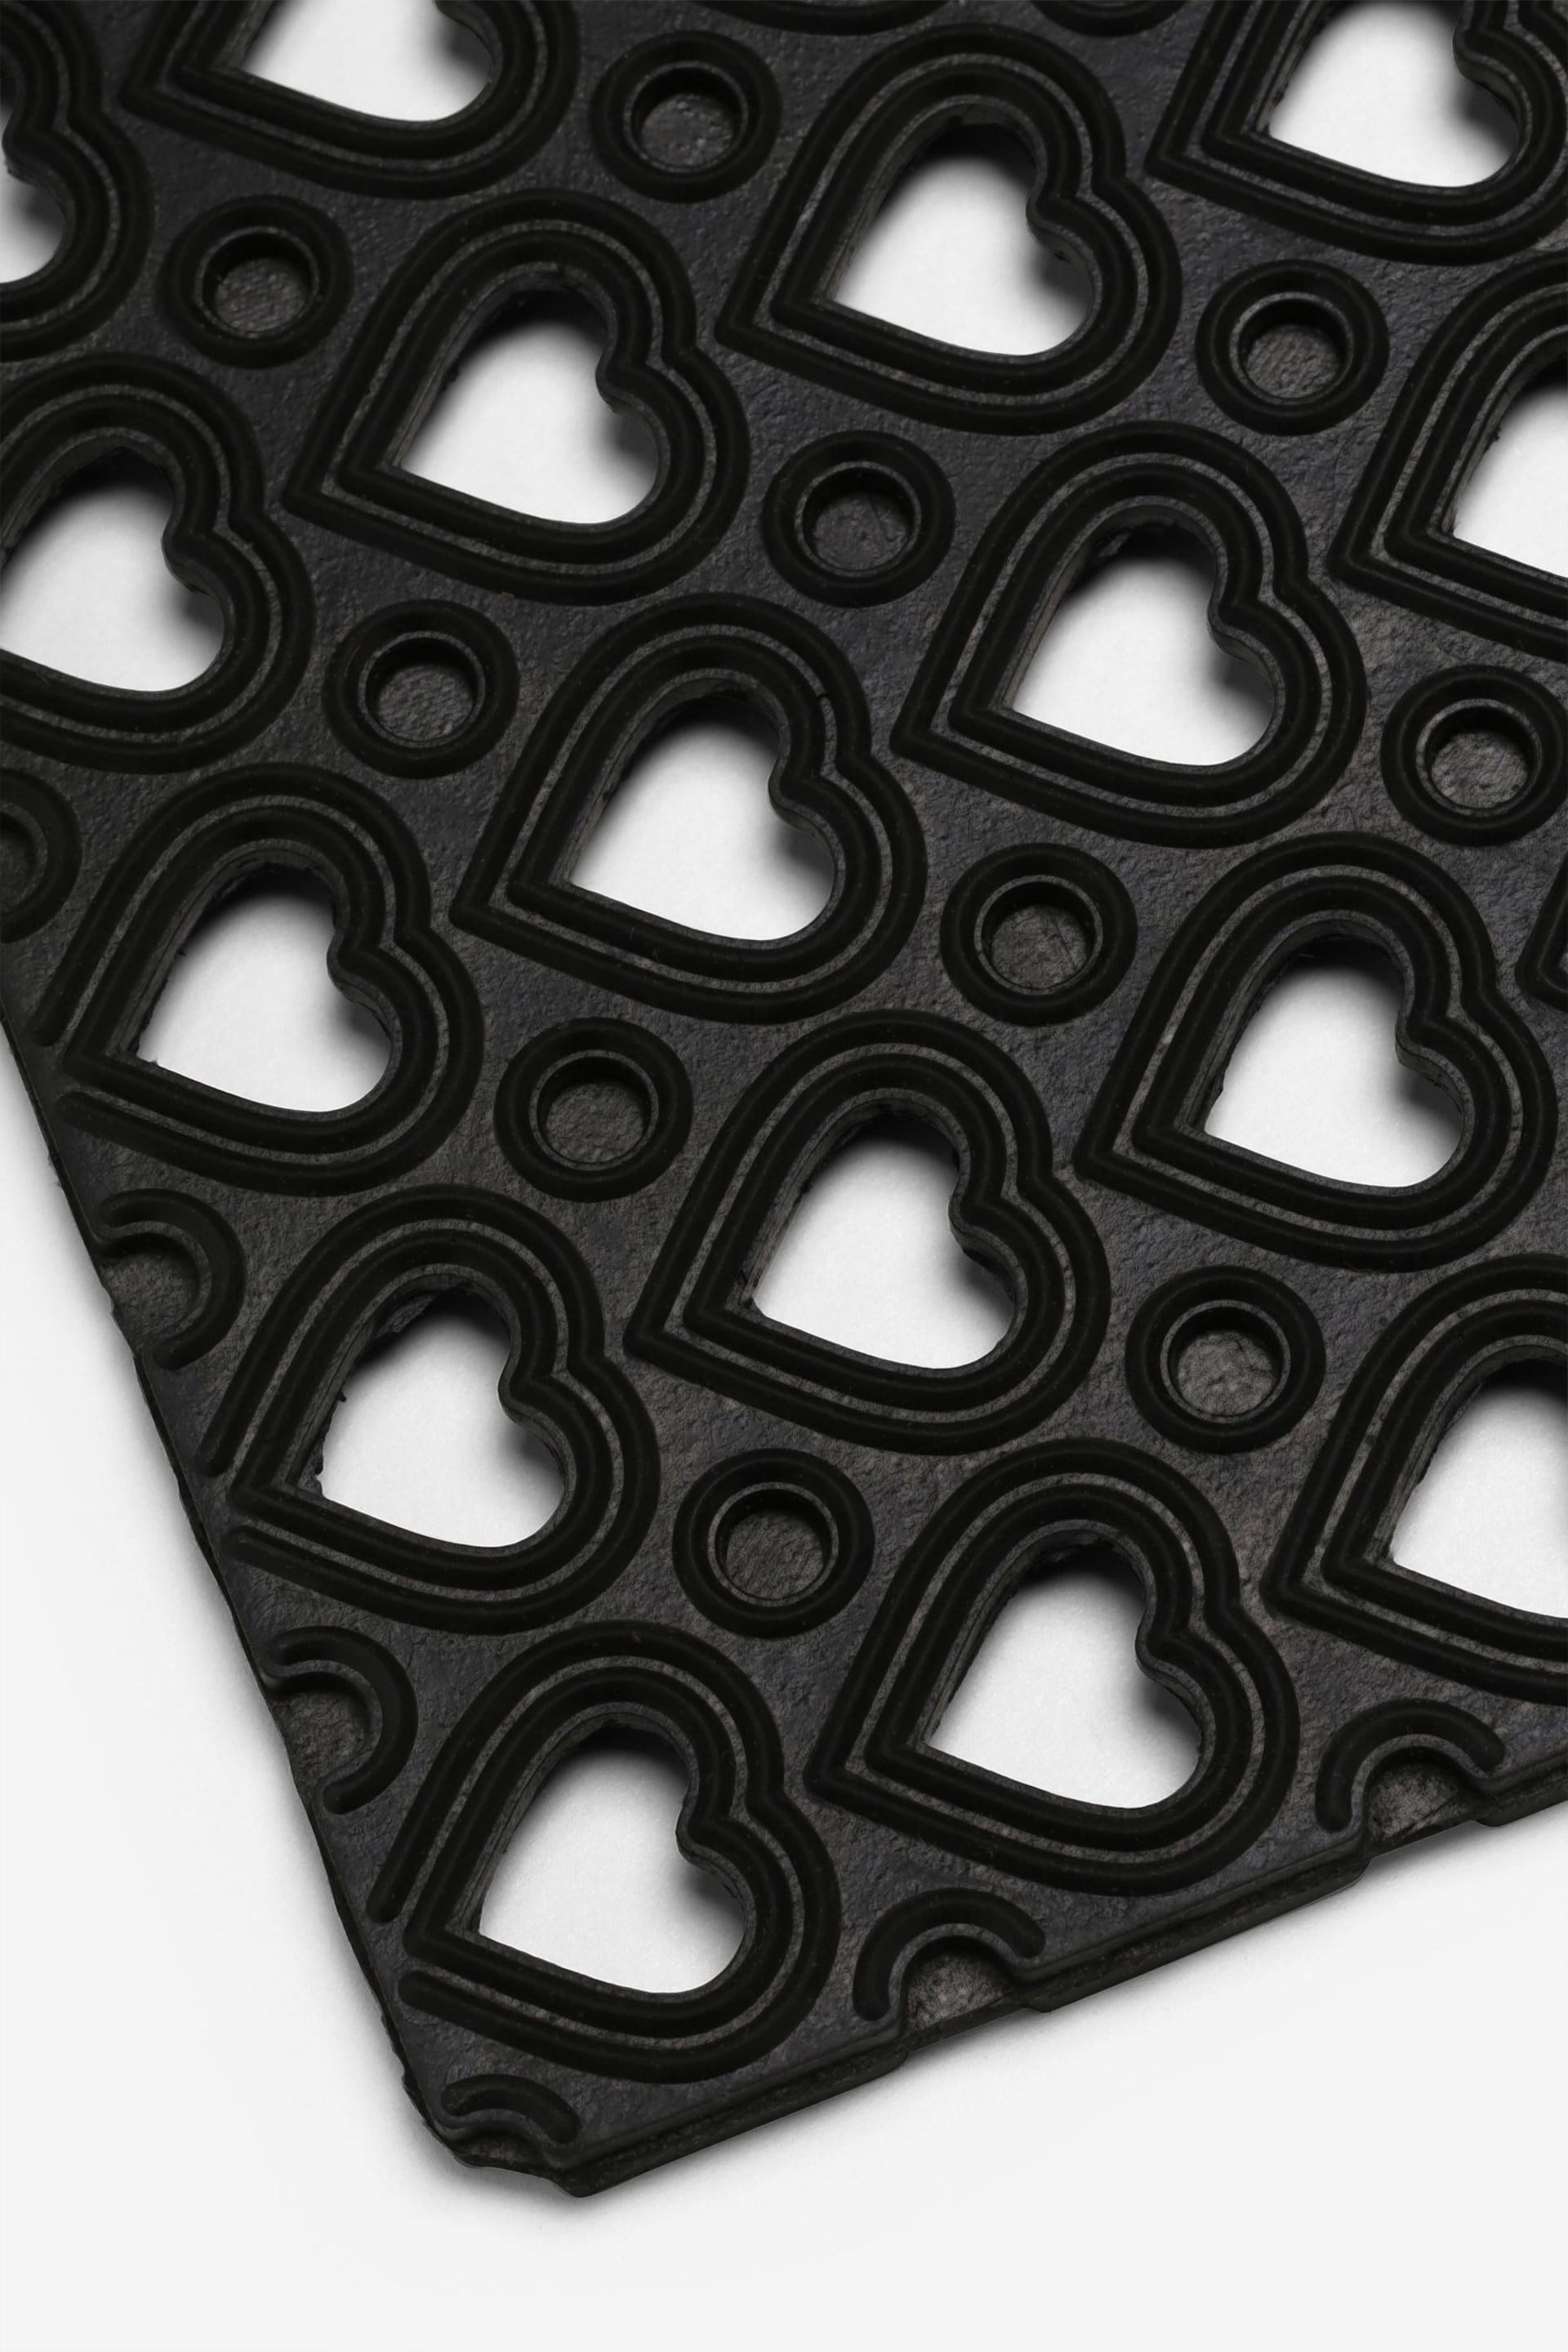 Black Mini Hearts Doormat - Image 3 of 3